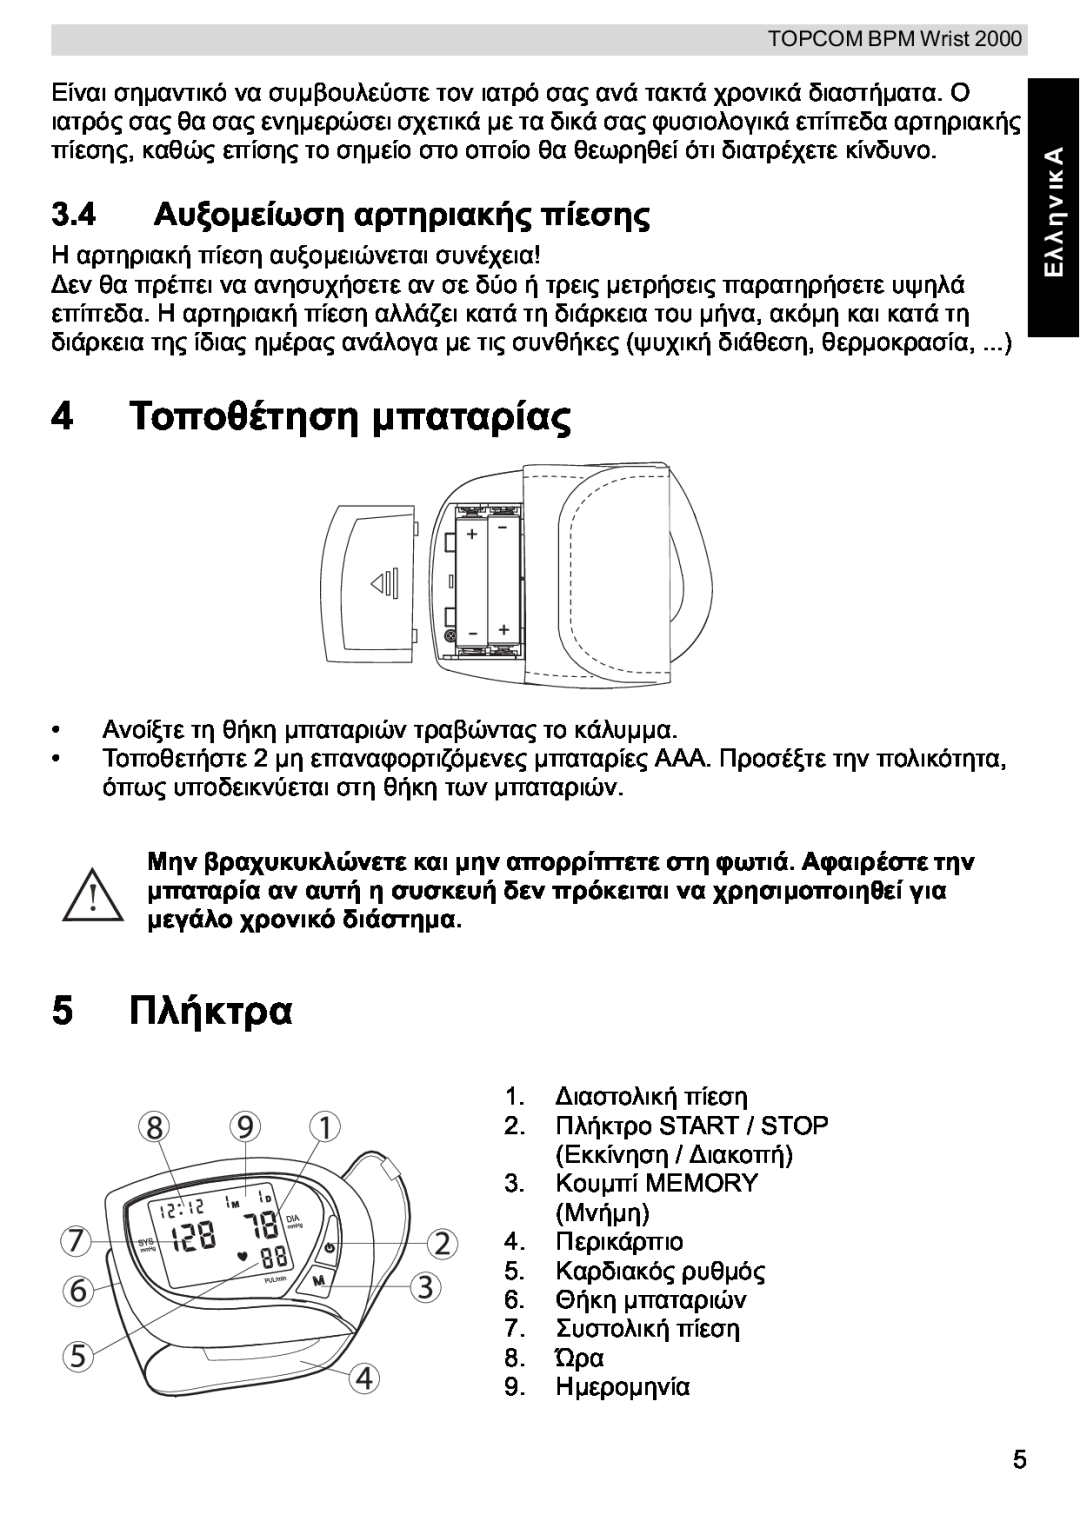 Topcom BPM WRIST 2000 manual Art / Stop, 3. RY 